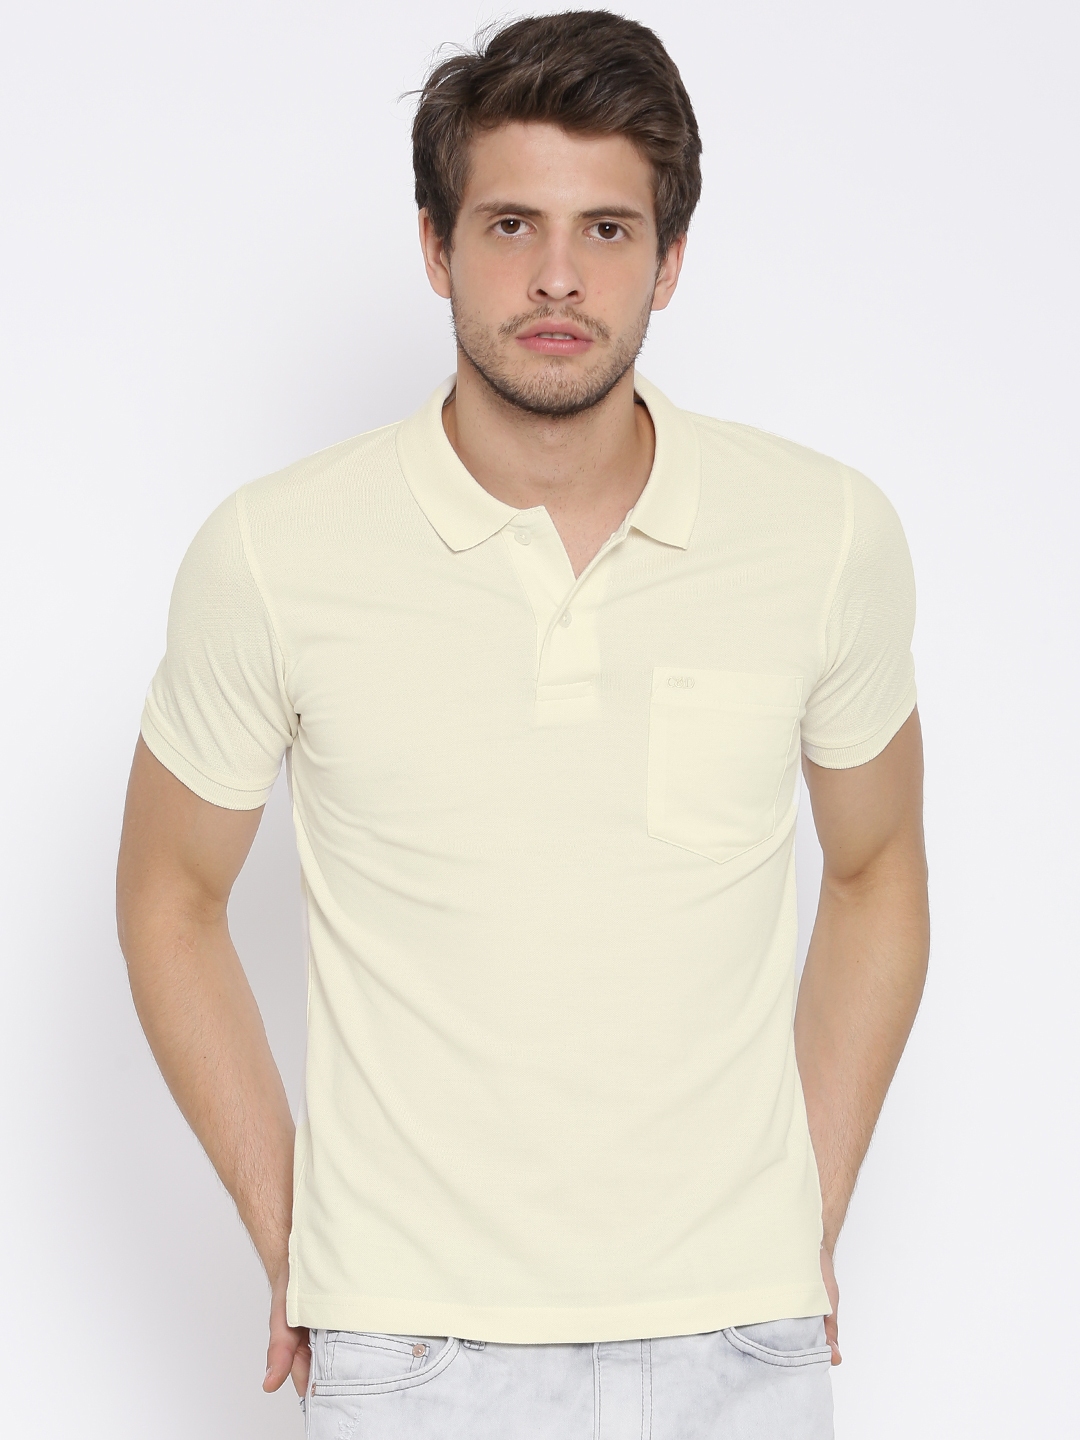 Buy Cloak & Decker By Monte Carlo Cream Coloured Polo T Shirt - Tshirts ...